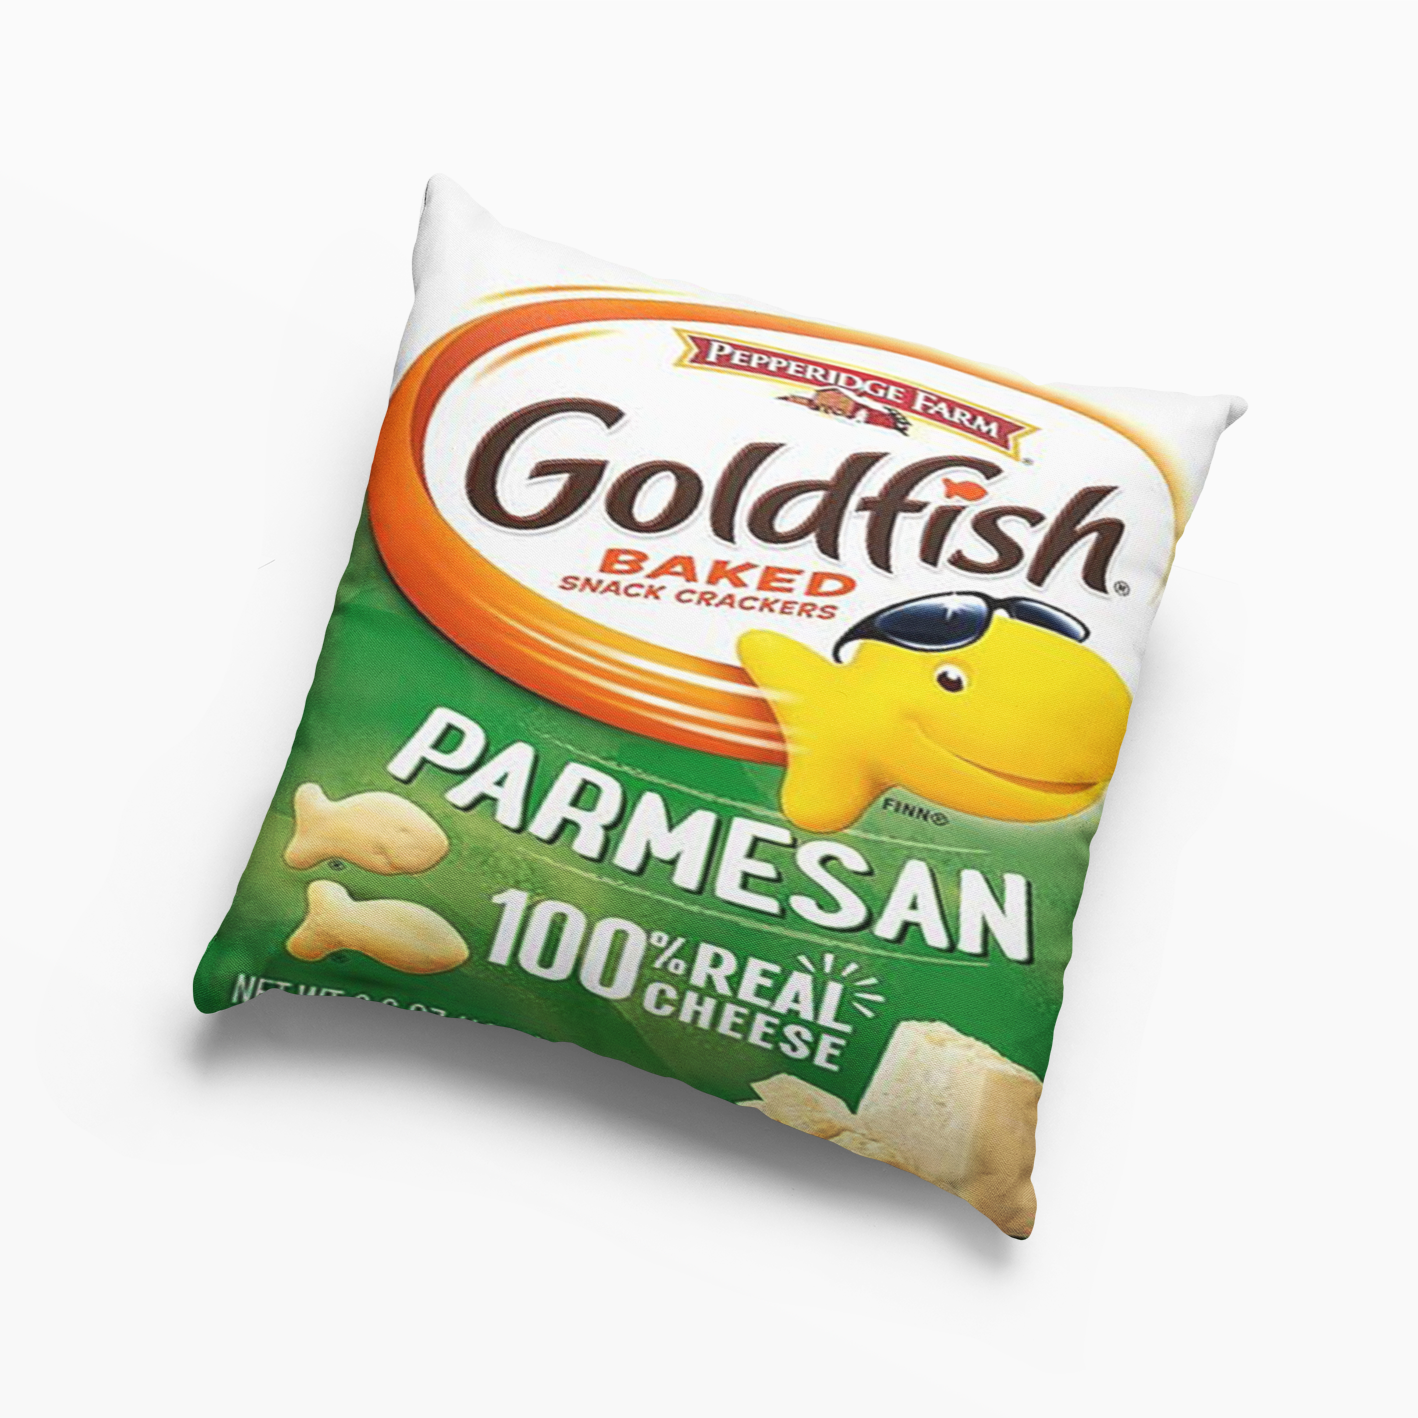 Goldfish Parmesan Crackers, Snack Crackers Pillow